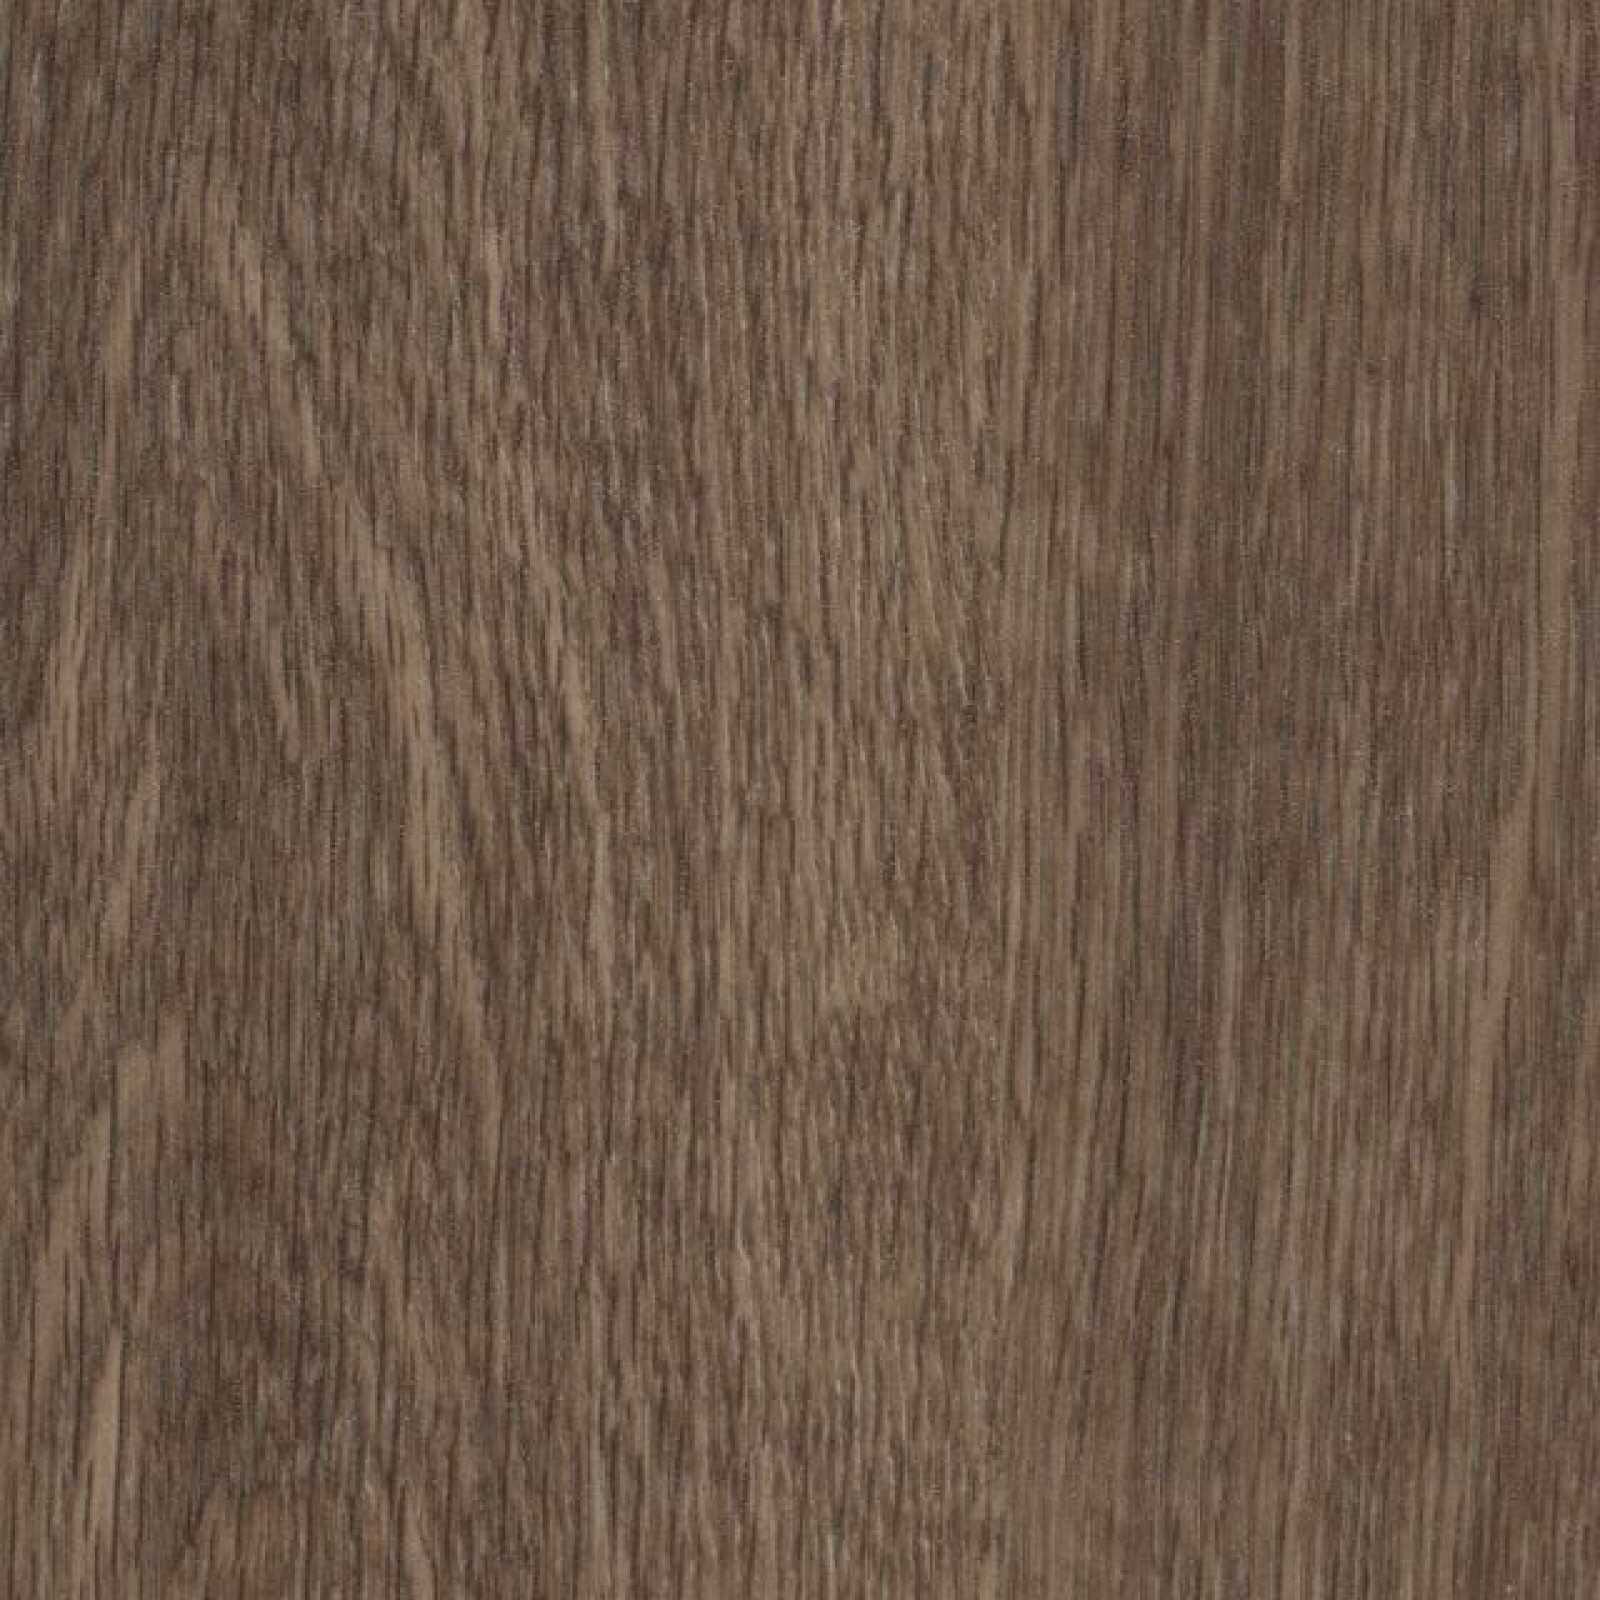 Vzor - 60376 chocolate collage oak